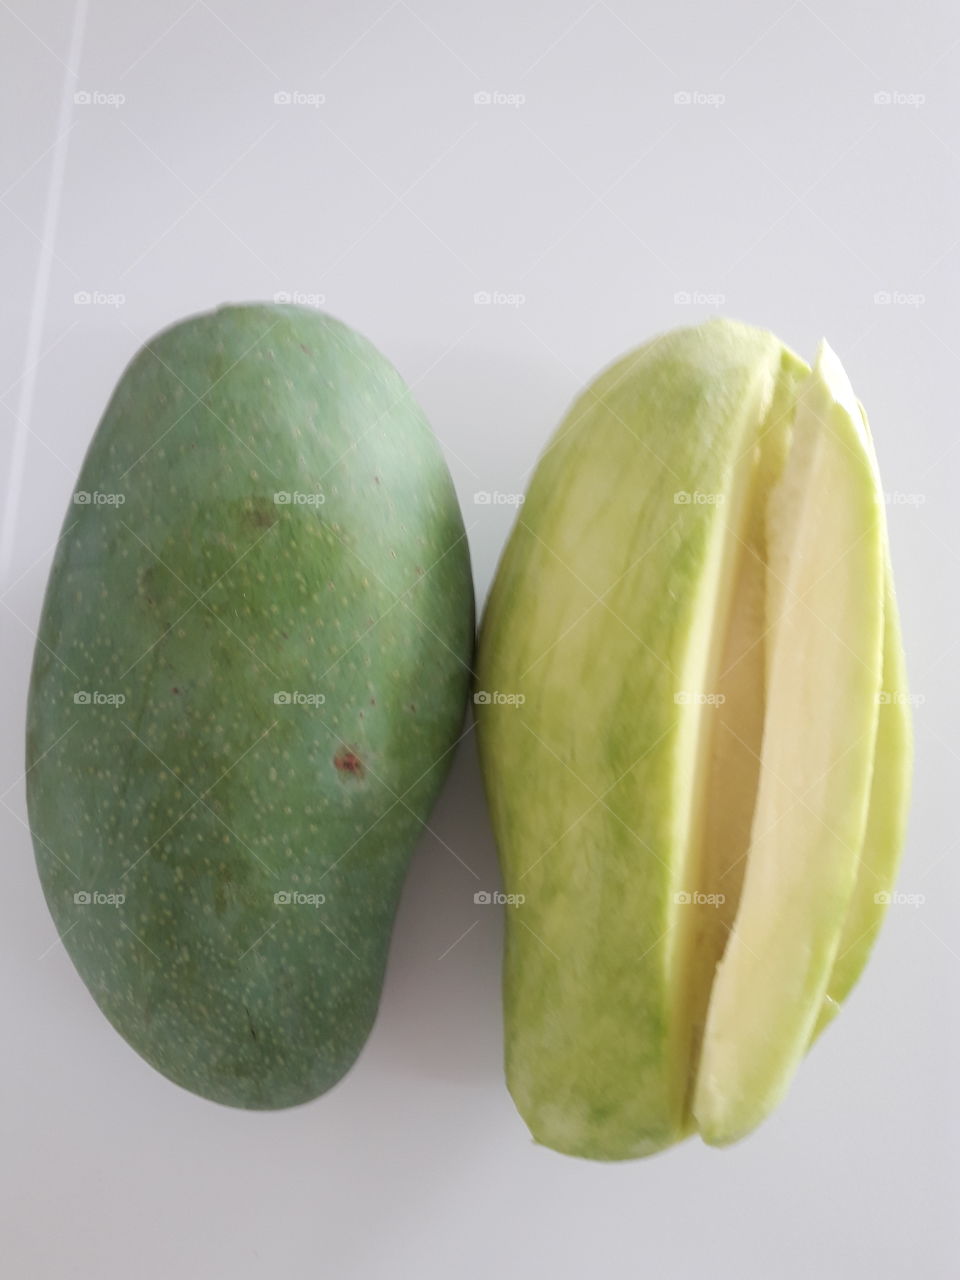 thai green mangoes